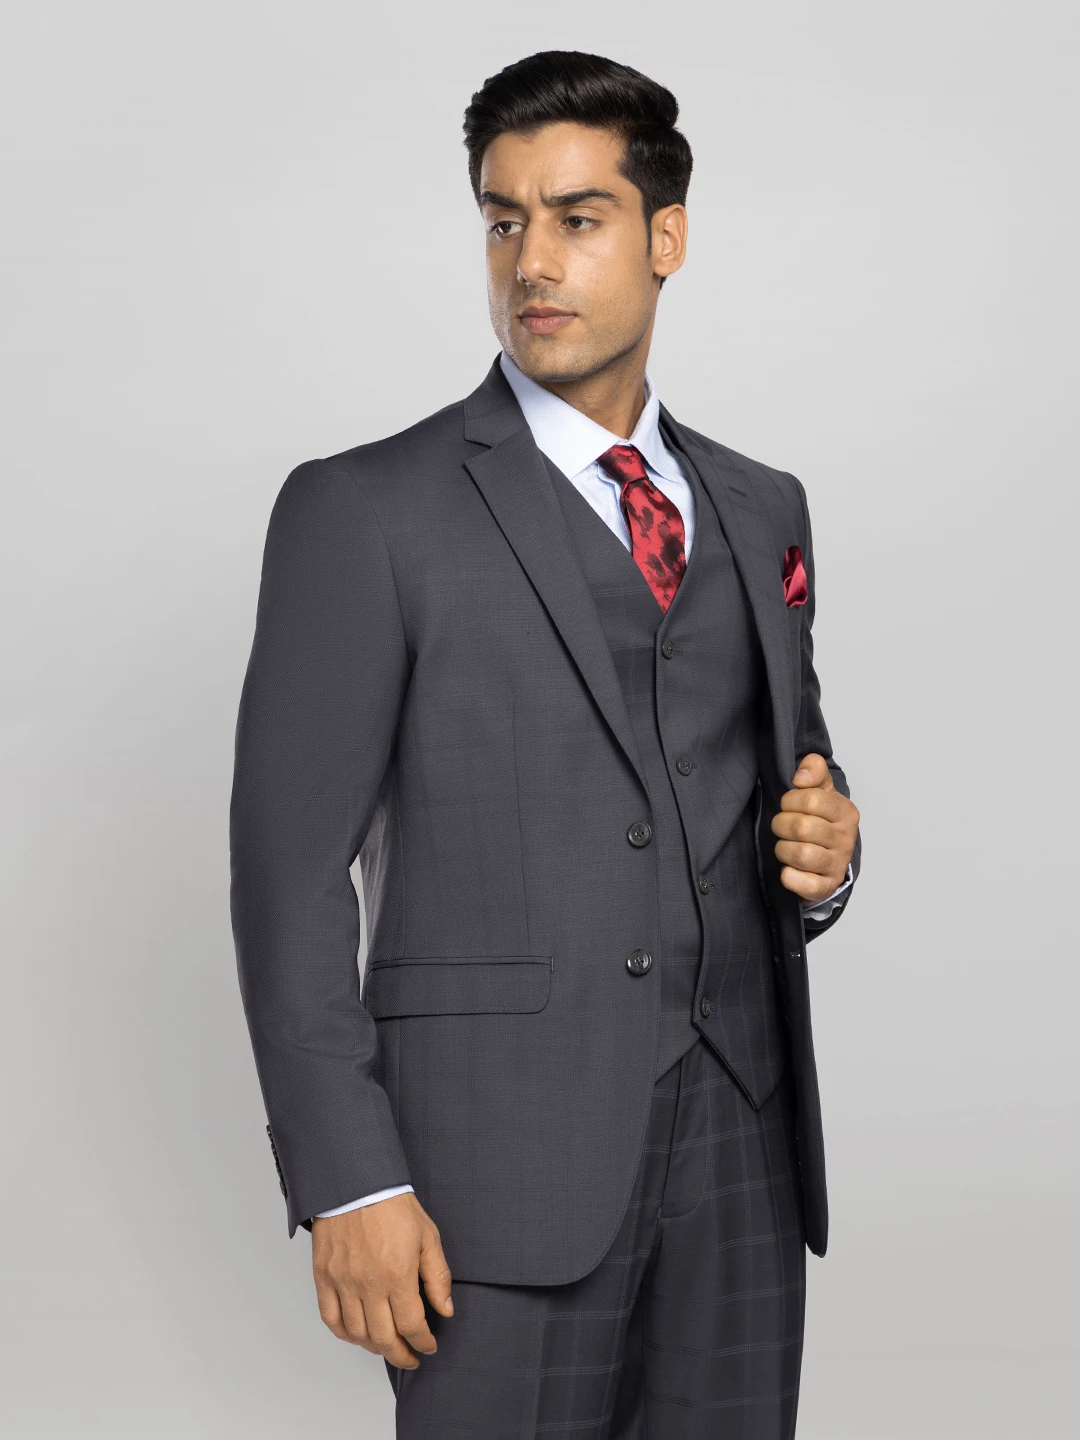 Men's 3 piece Checkered Business Suit - Grey